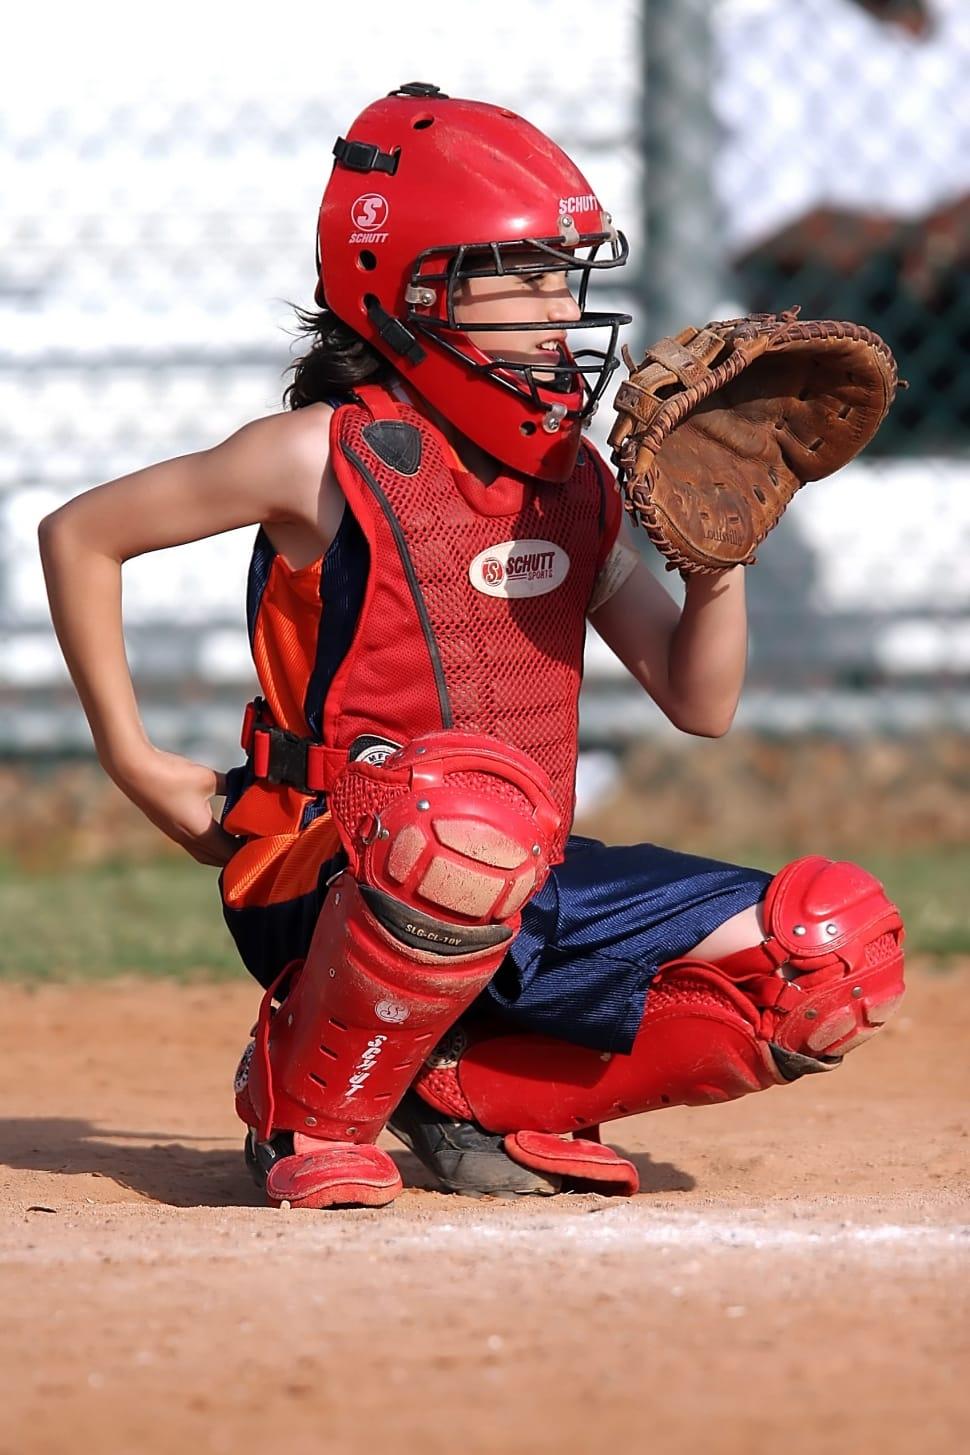 red baseball catcher helmet and vest free image